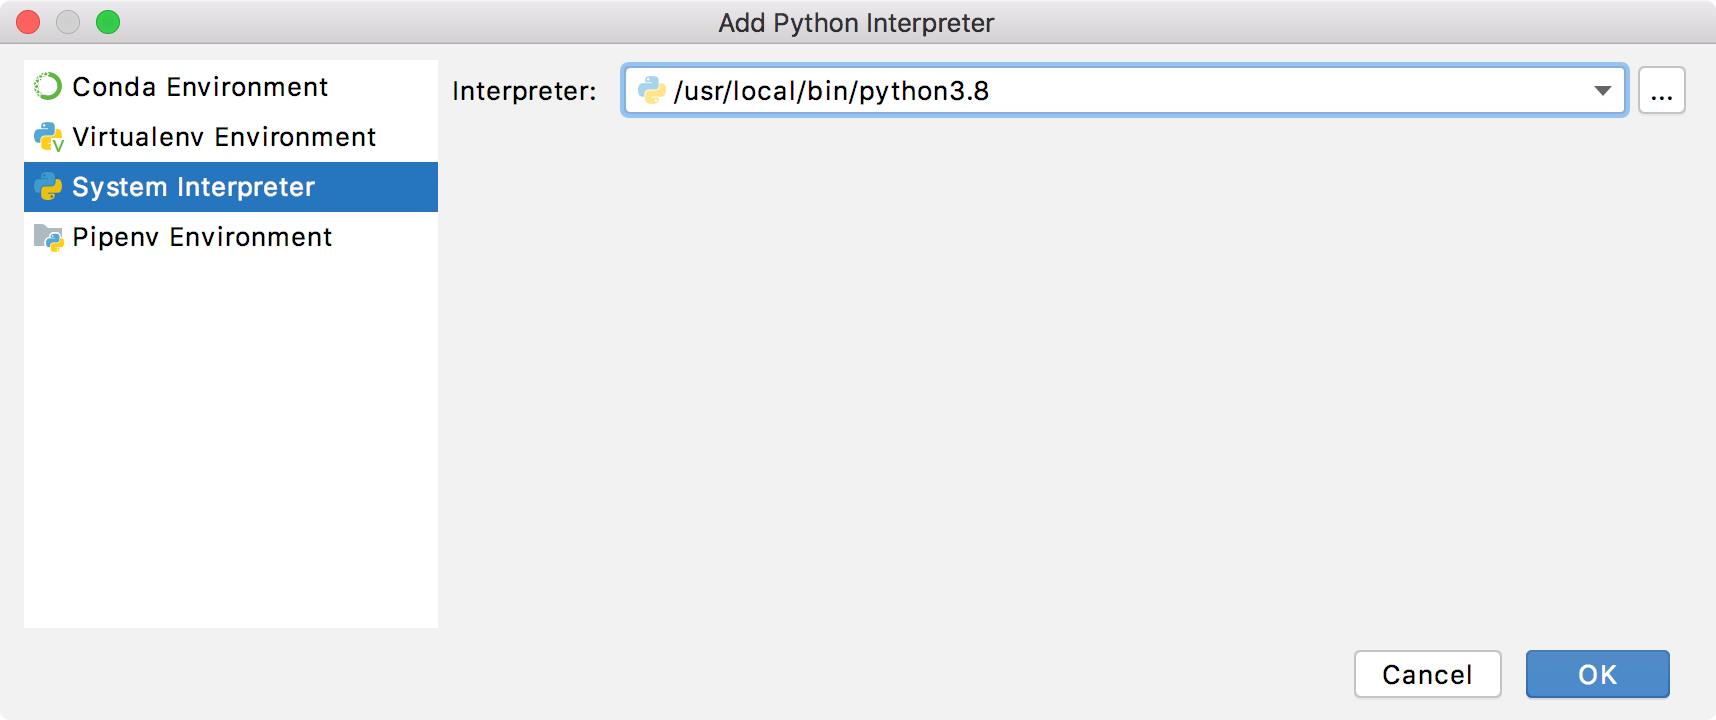 Adding a system interpreter